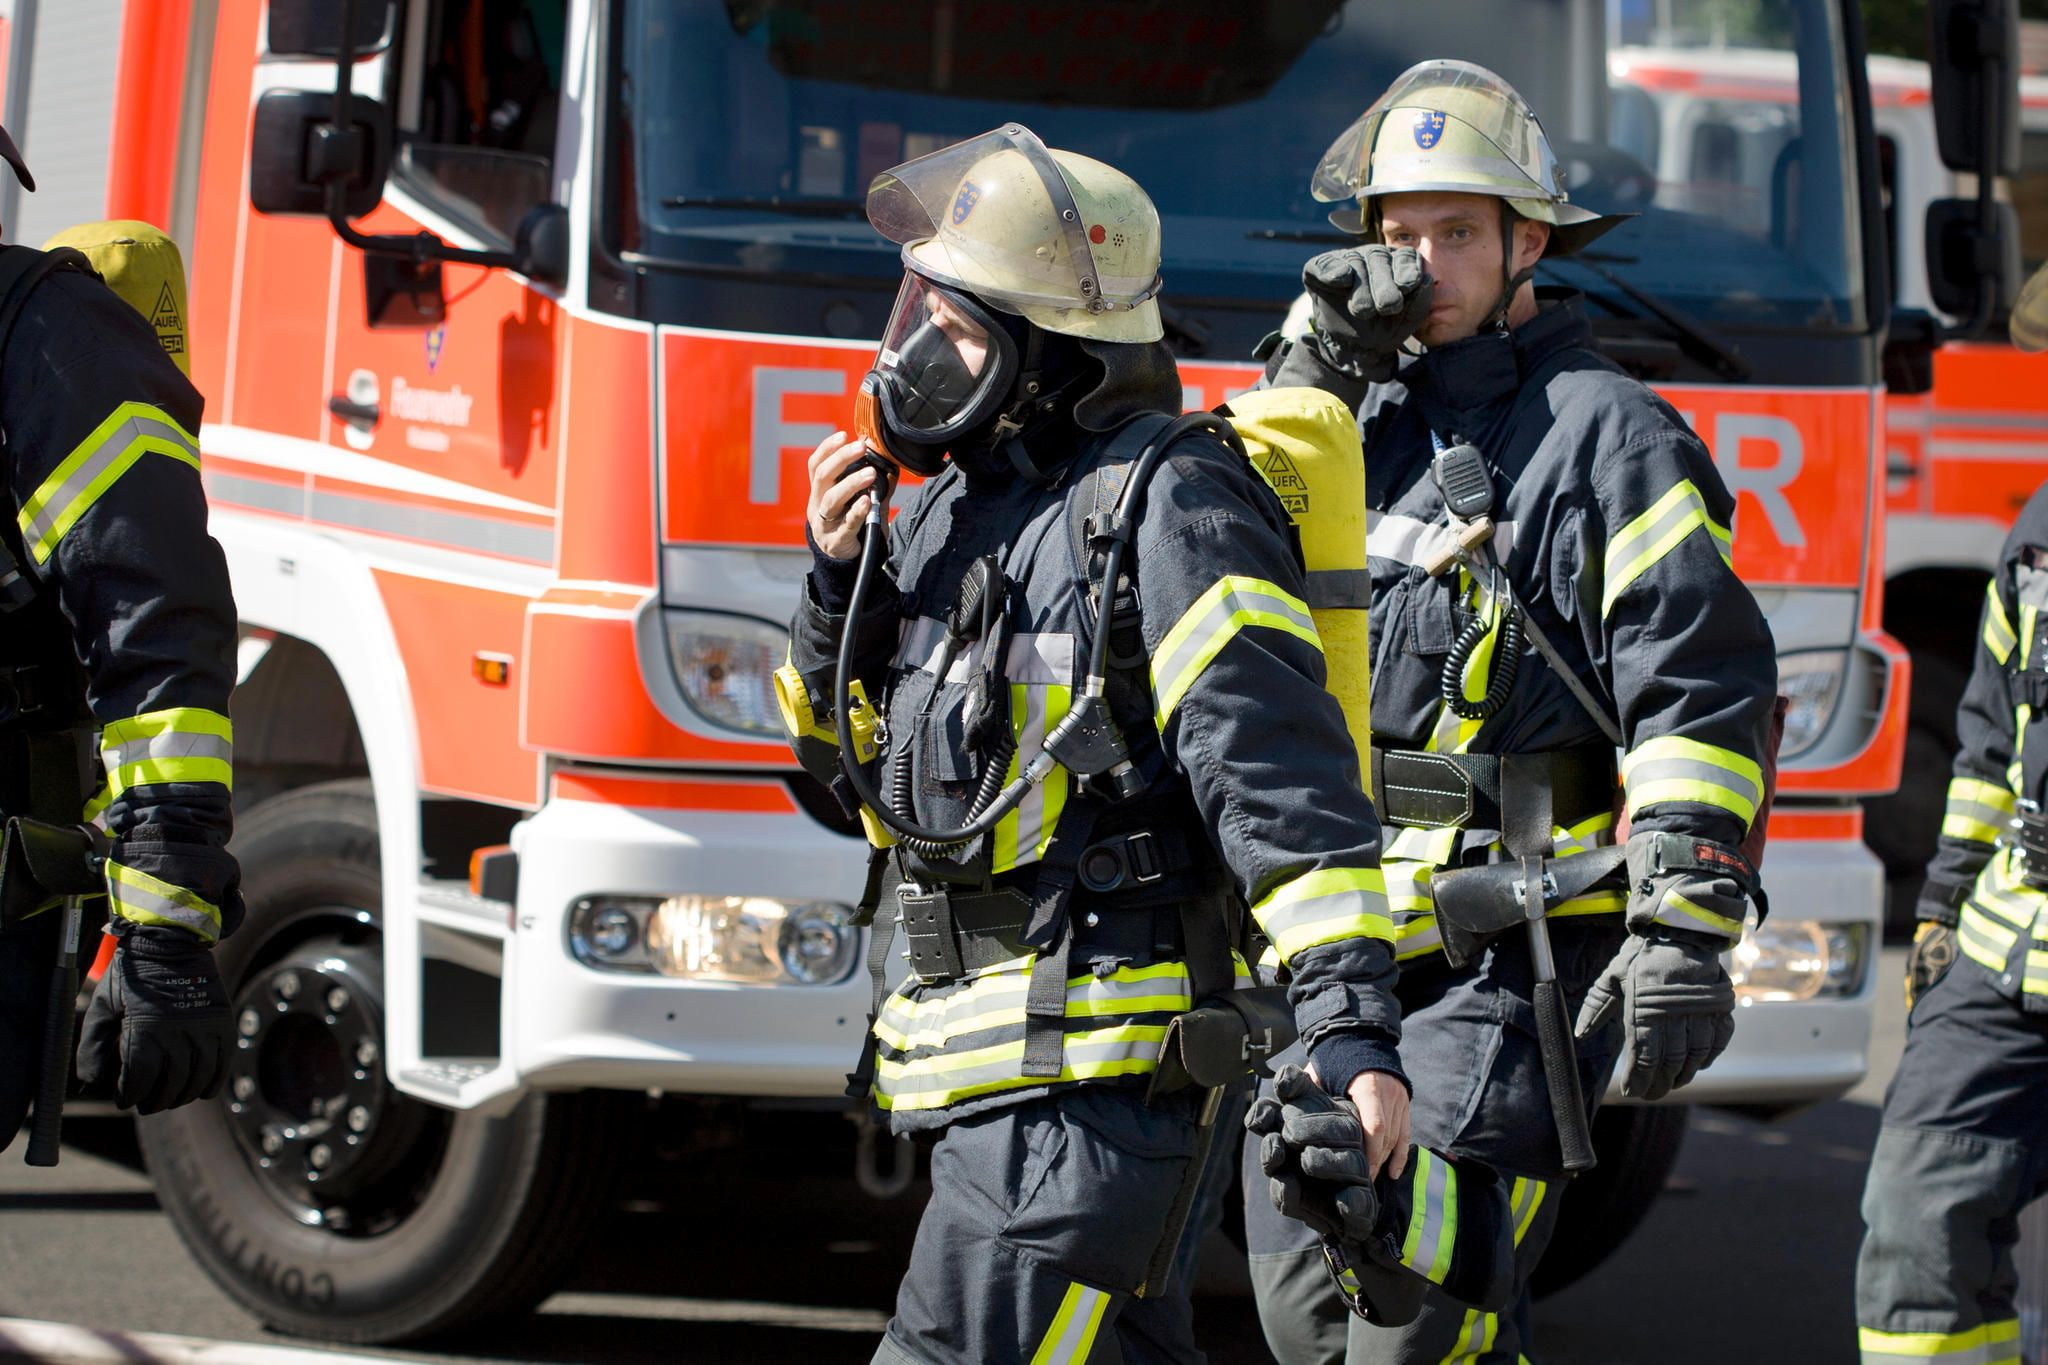 emergency, engine, feuerwehr, fire, firetruck, semi, vehicle